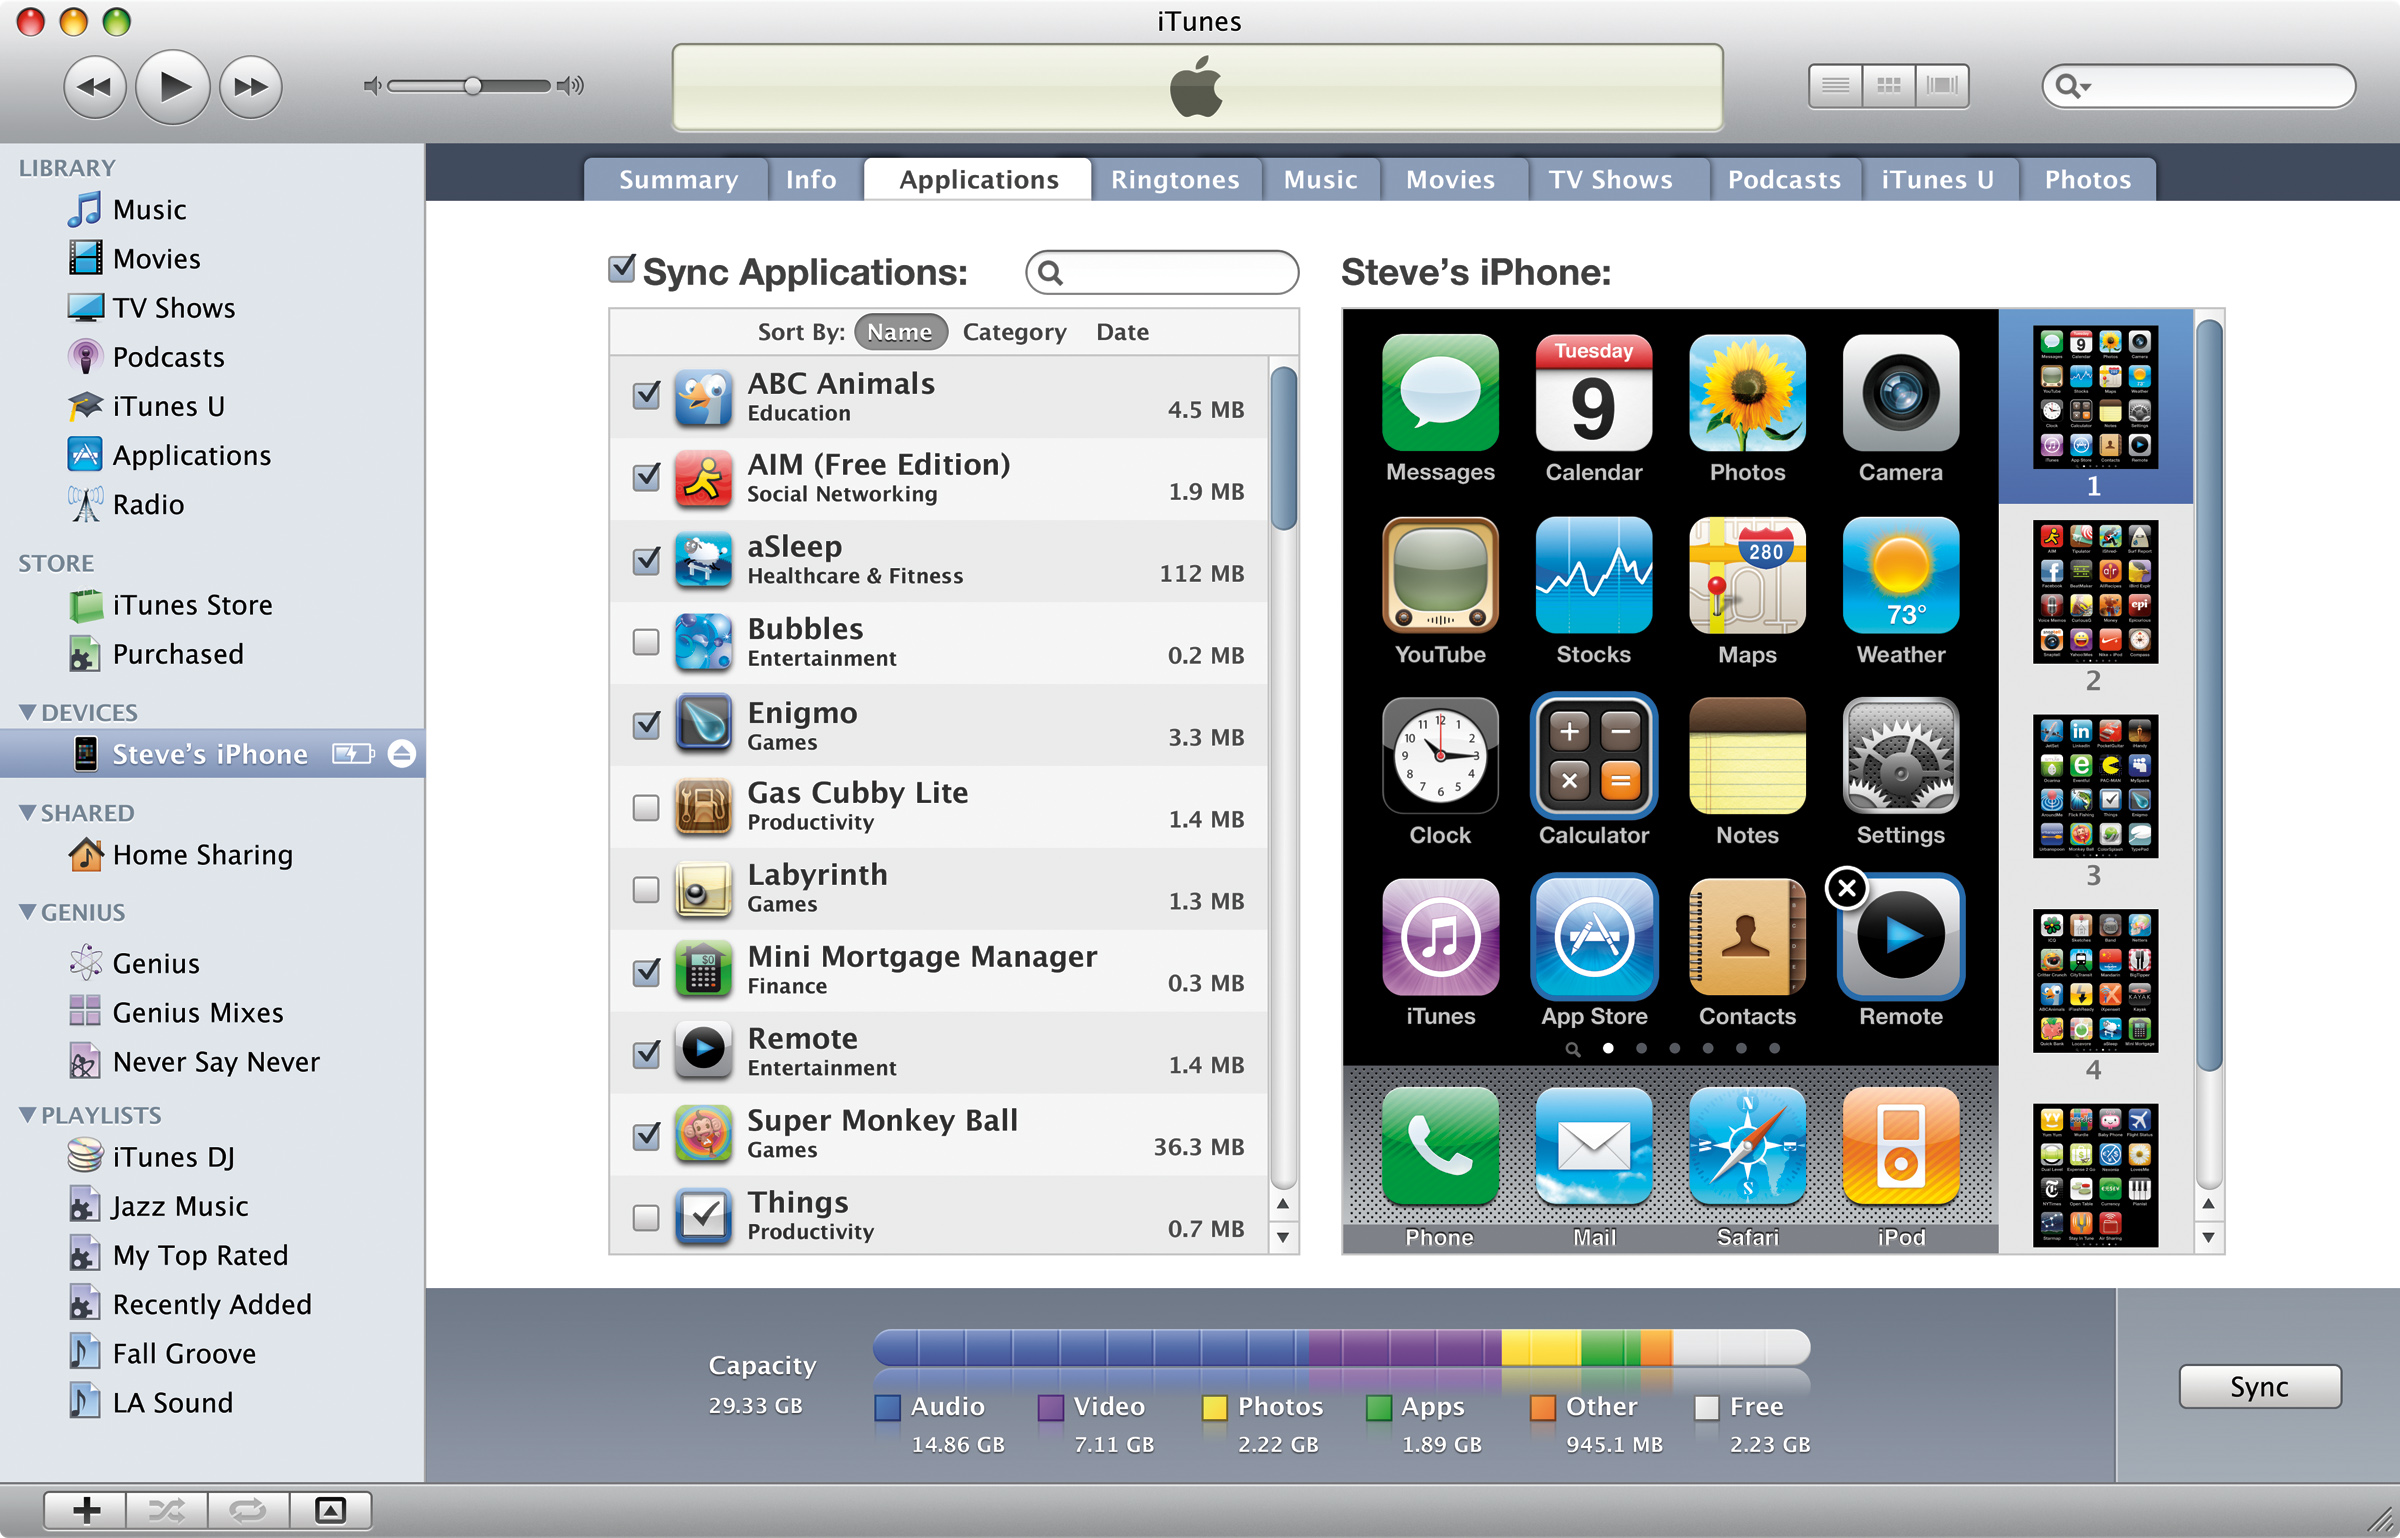 itunes 9 download mac